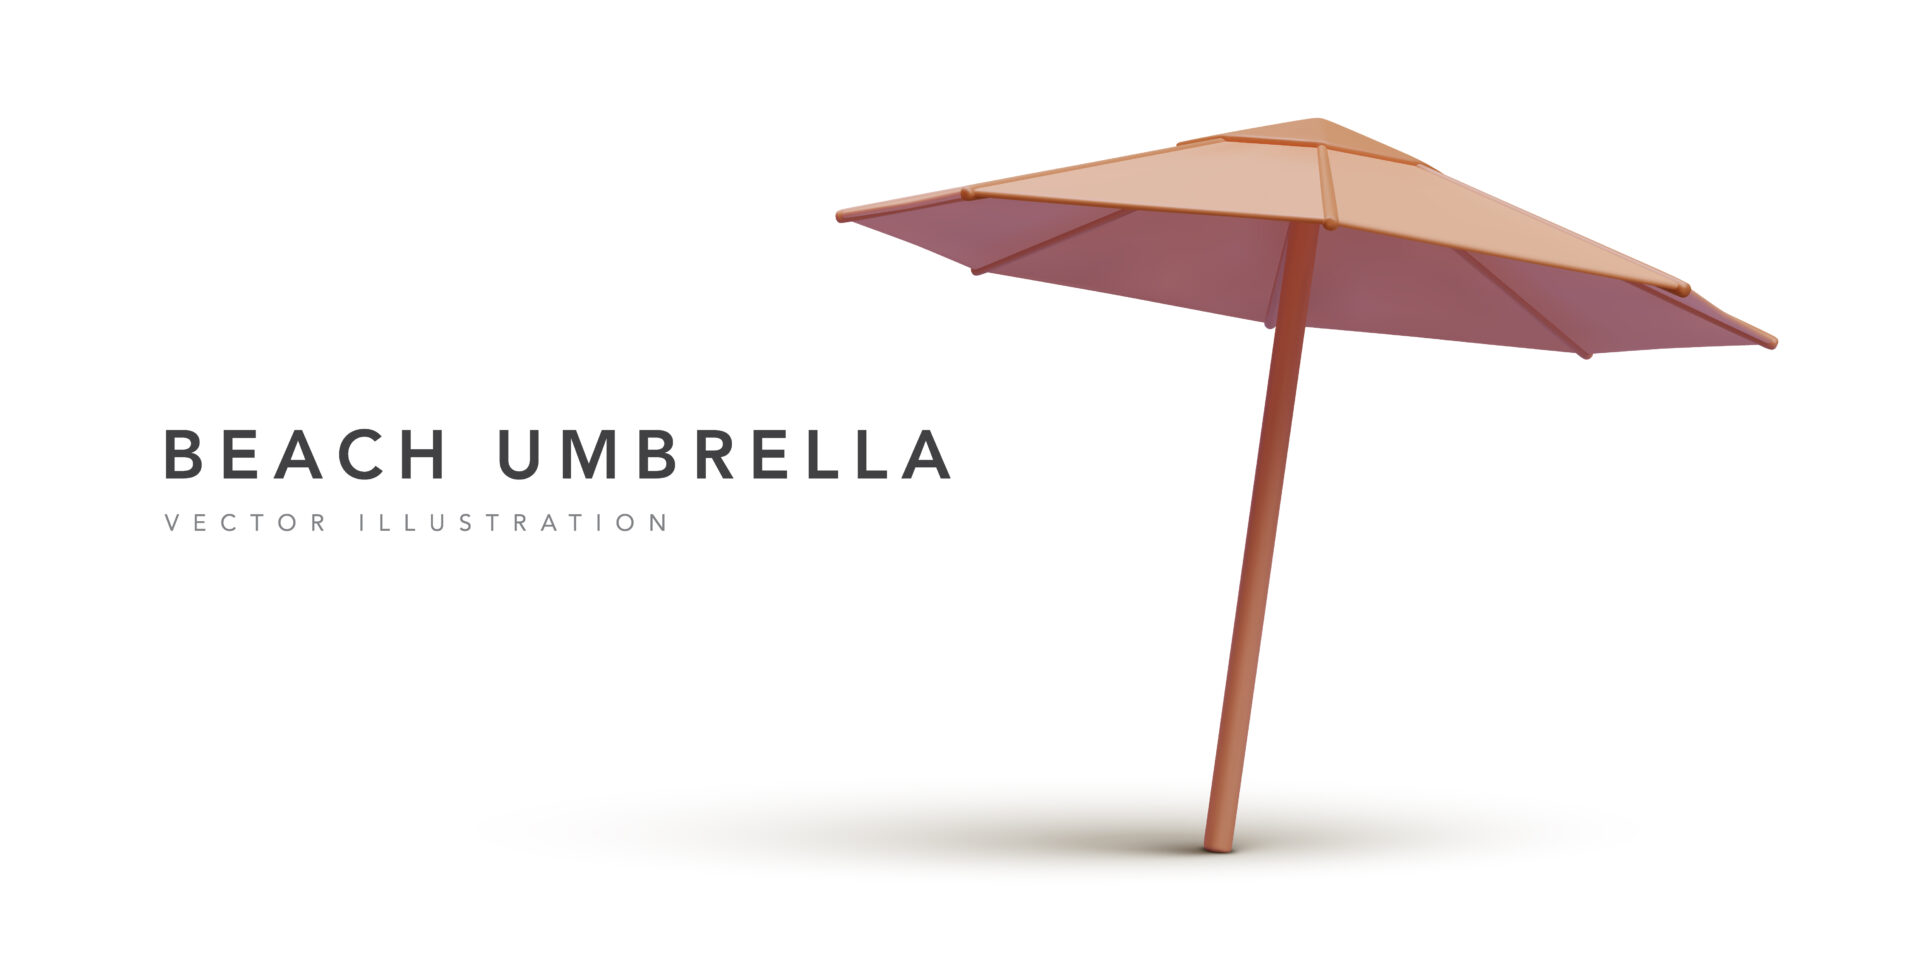 3d-beach-umbrella-with-shadow-isolated-white-background-vector-illustration-%e0%b8%95%e0%b8%b1%e0%b8%a7%e0%b8%ad%e0%b8%a2%e0%b9%88%e0%b8%b2%e0%b8%87